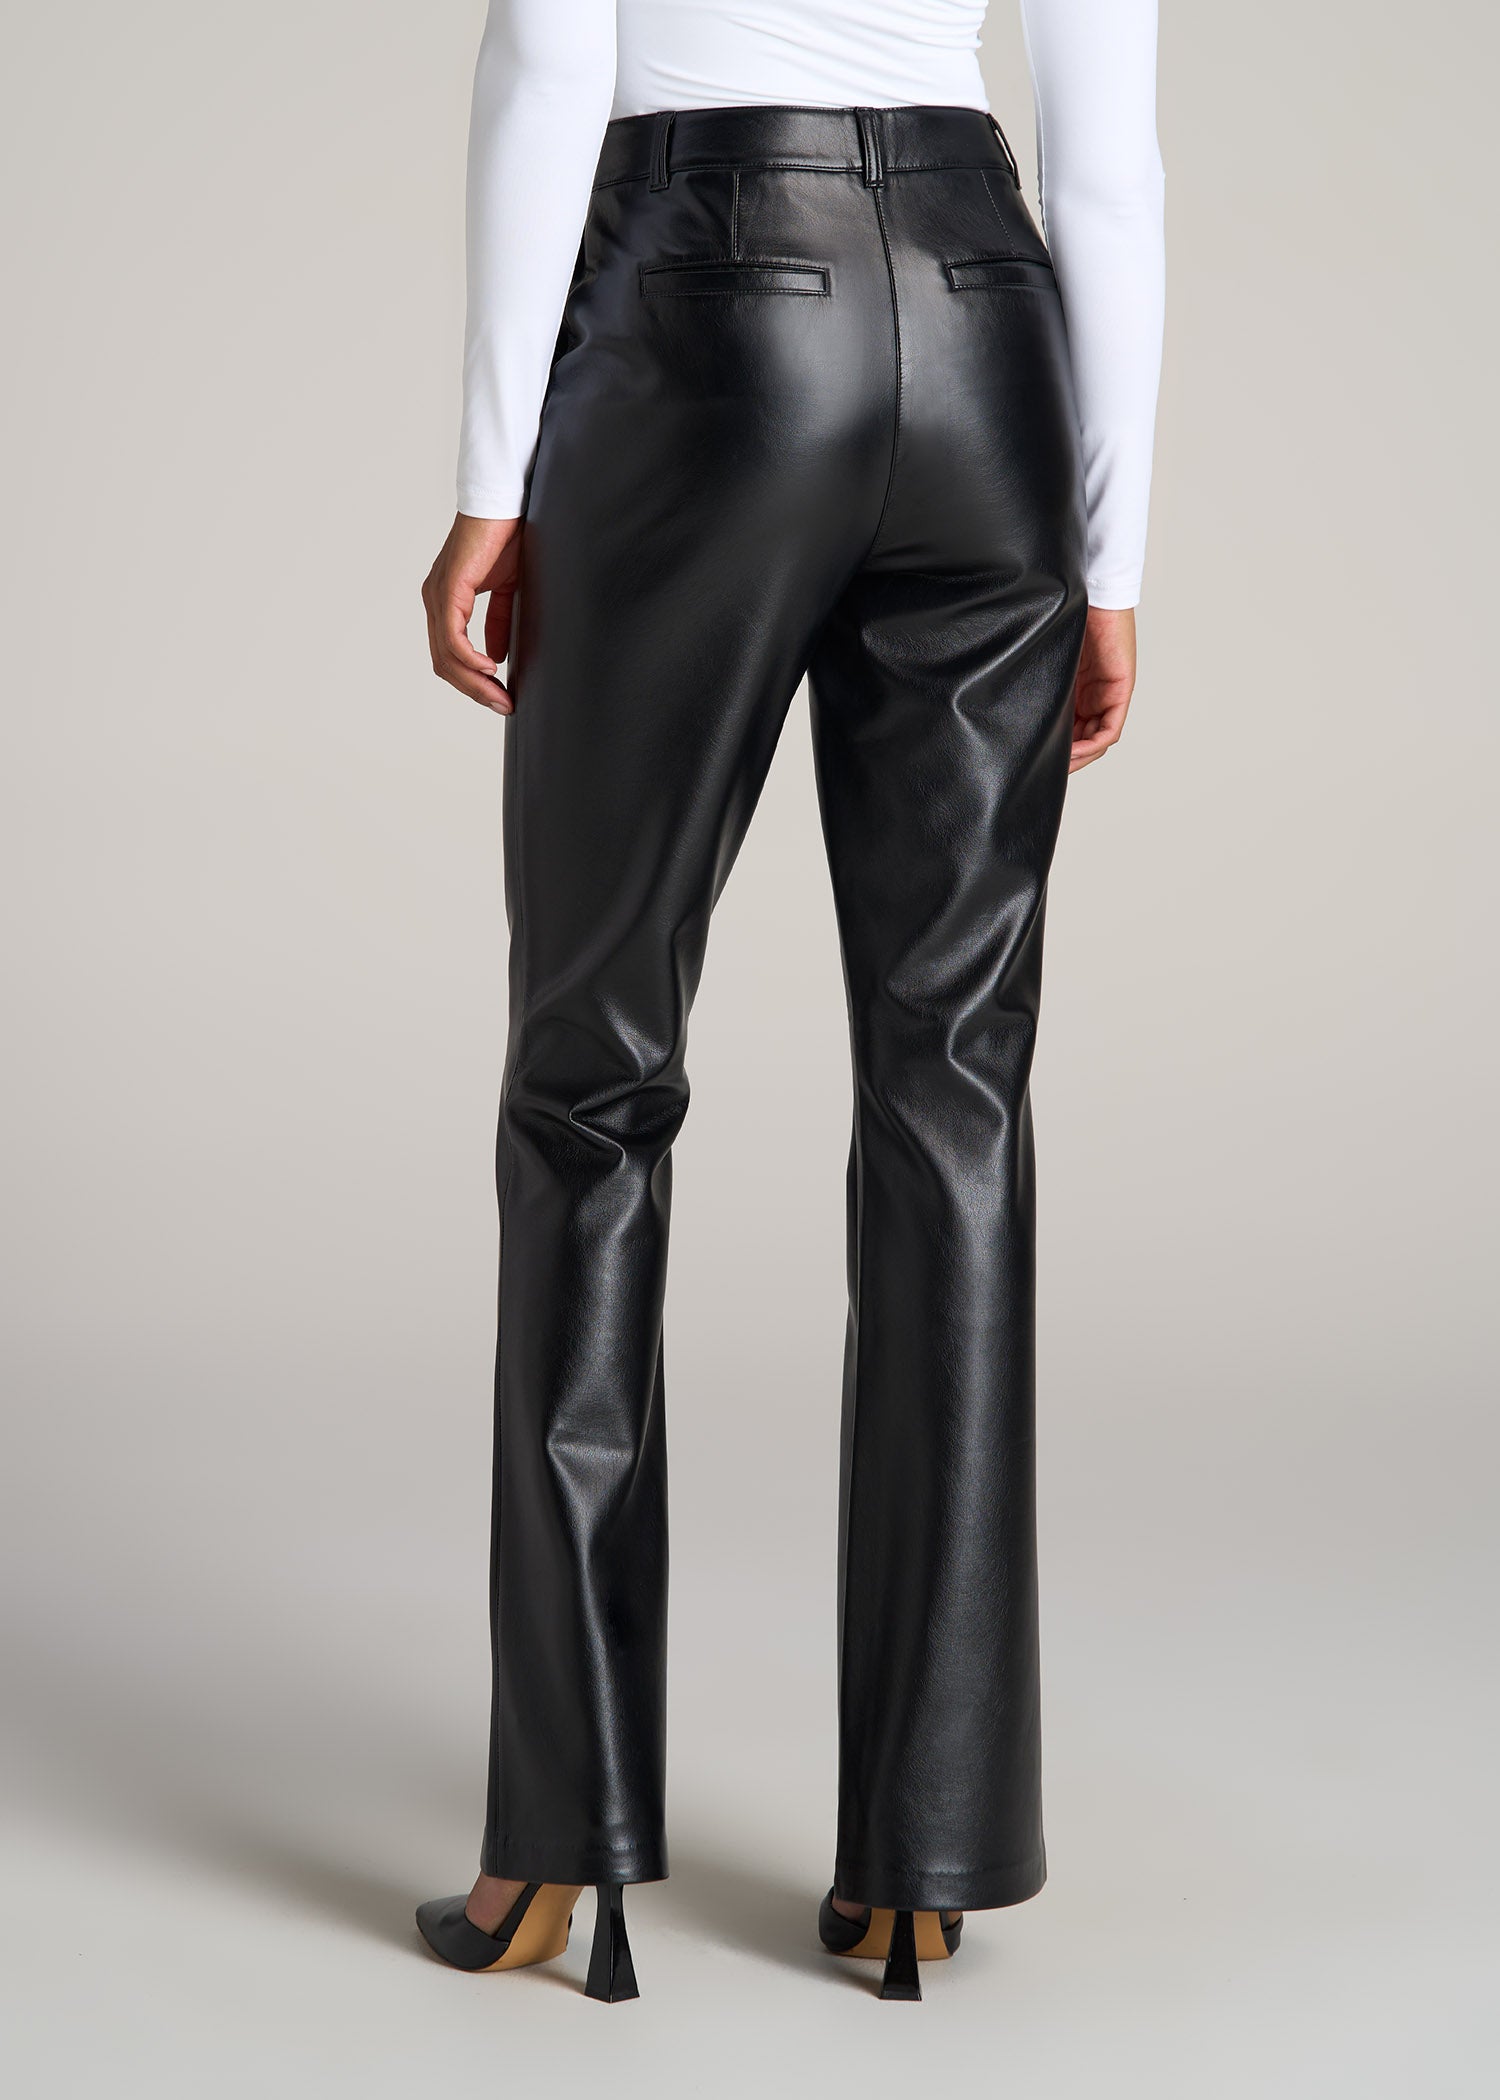 Women's Black Leather & Faux Leather Pants & Leggings | Nordstrom